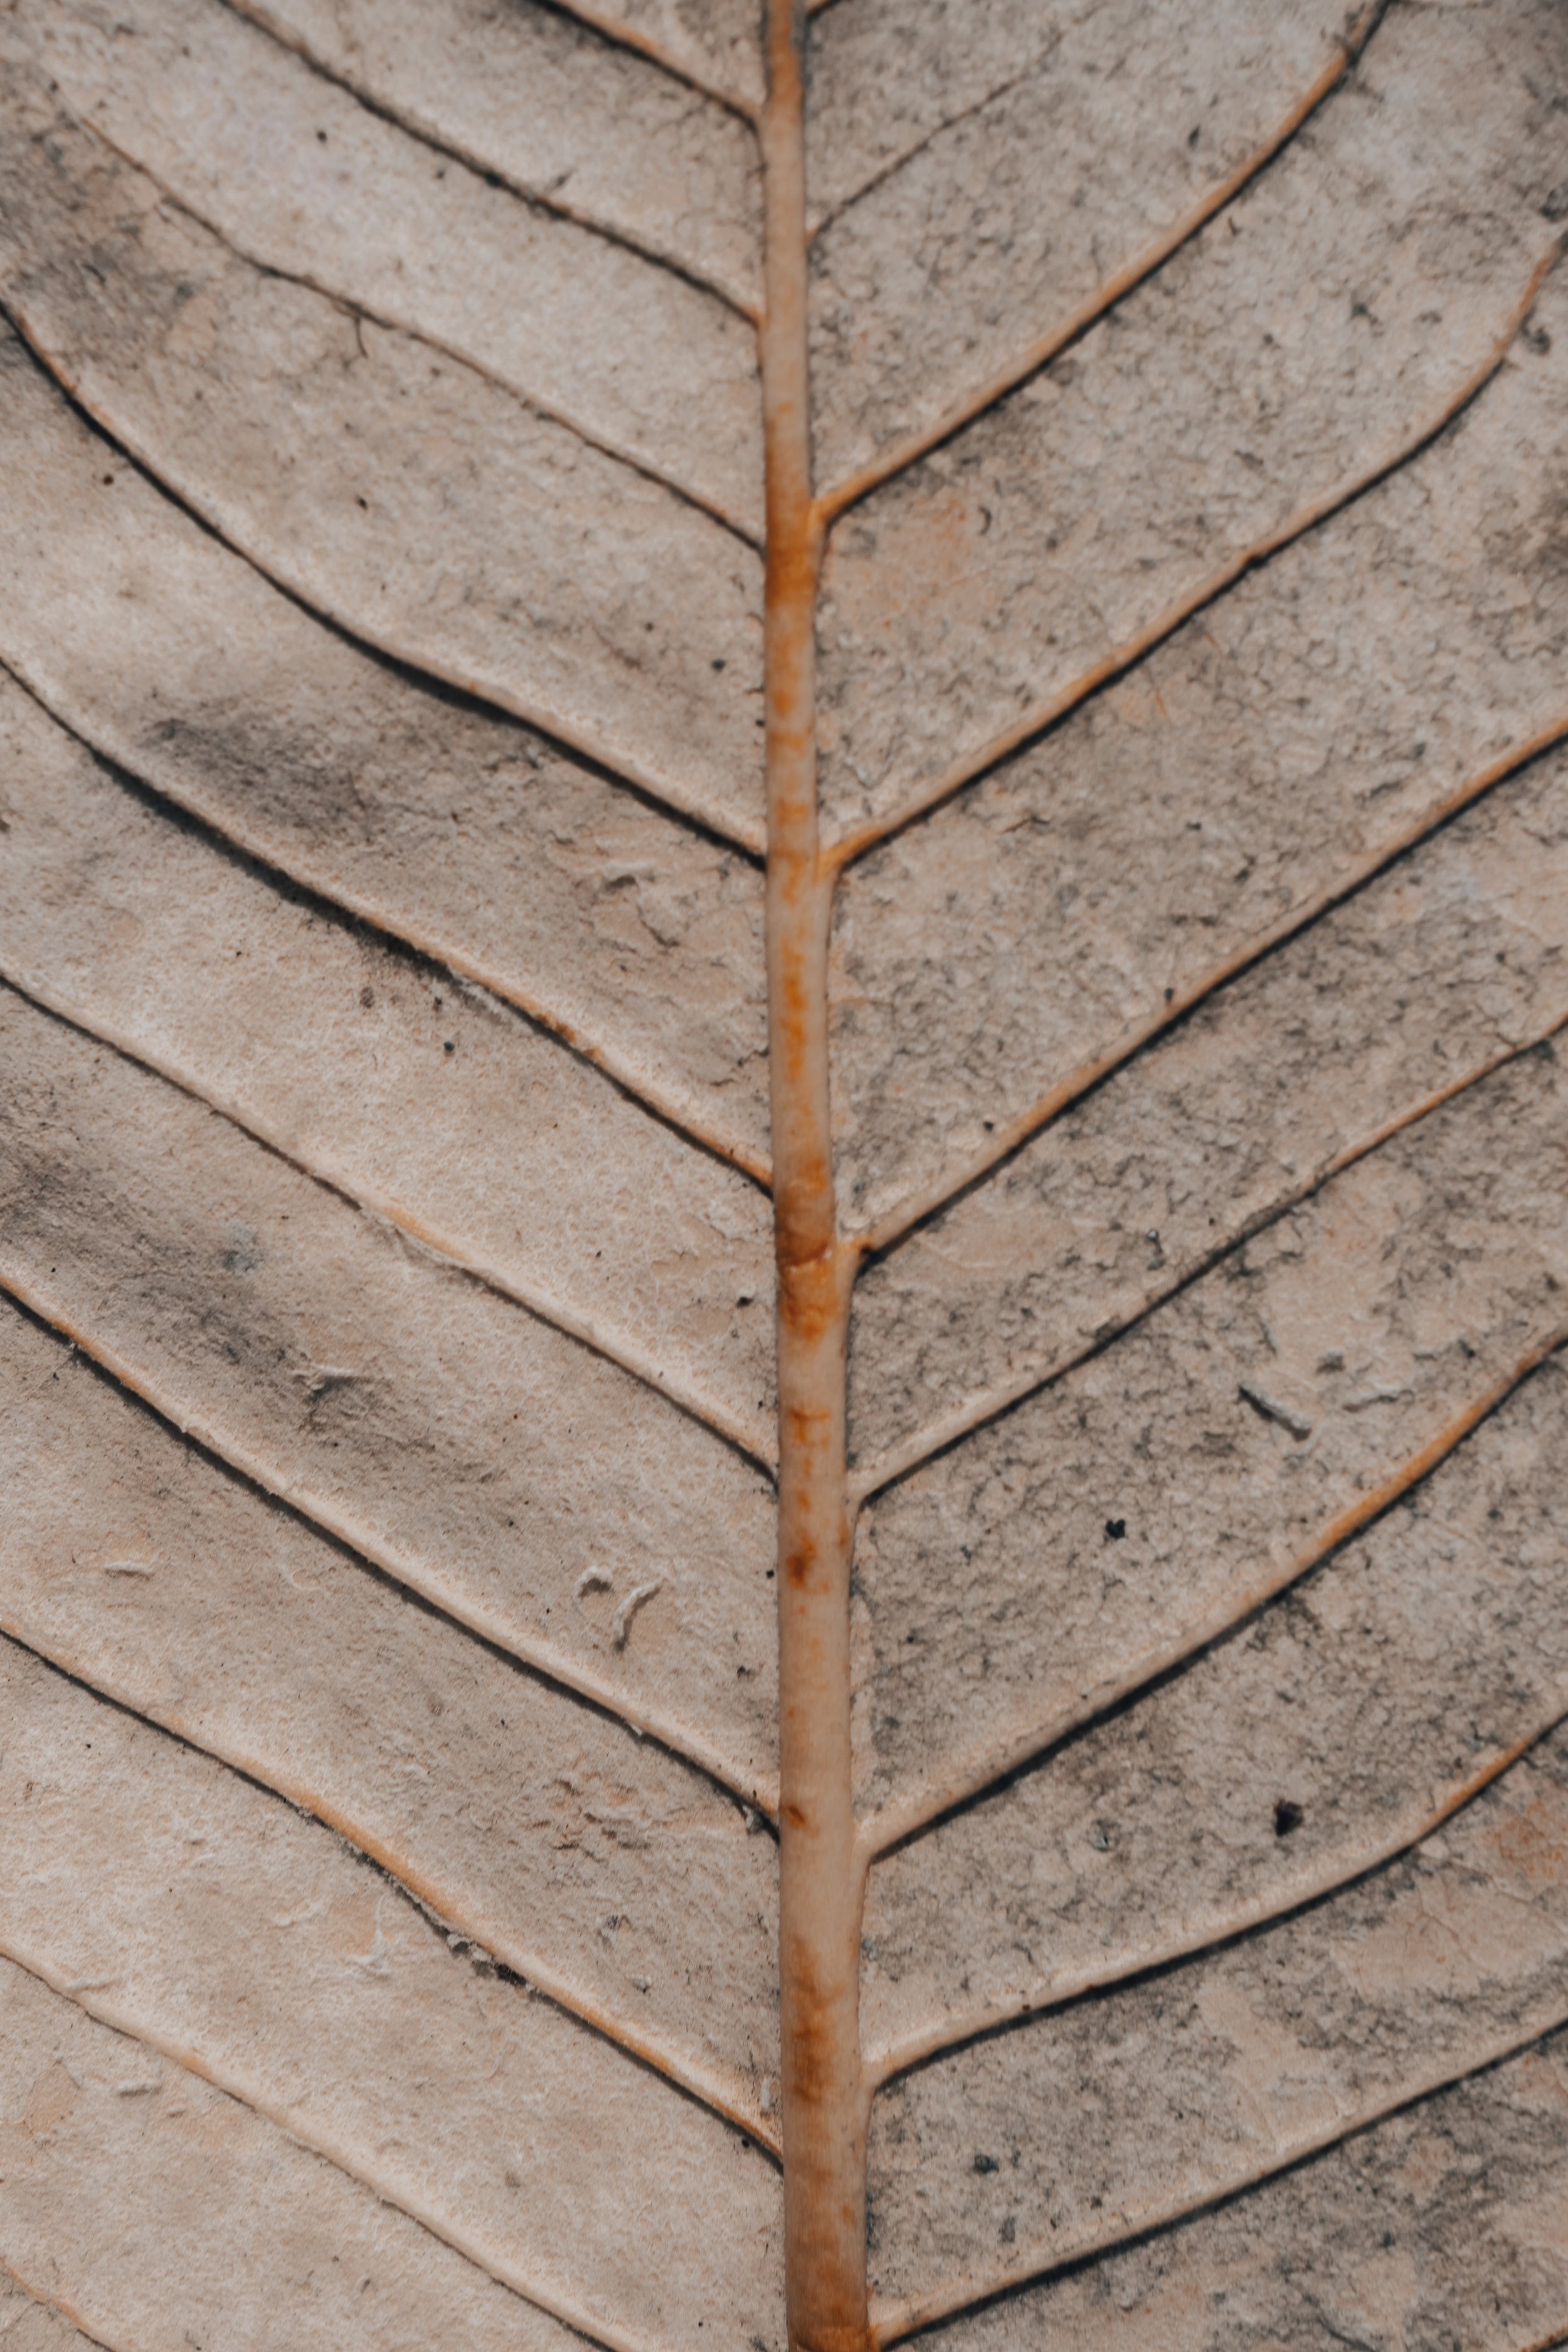 patterned leaf - jonny-gios-mN4p9Ho0kjY-unsplash.jpg